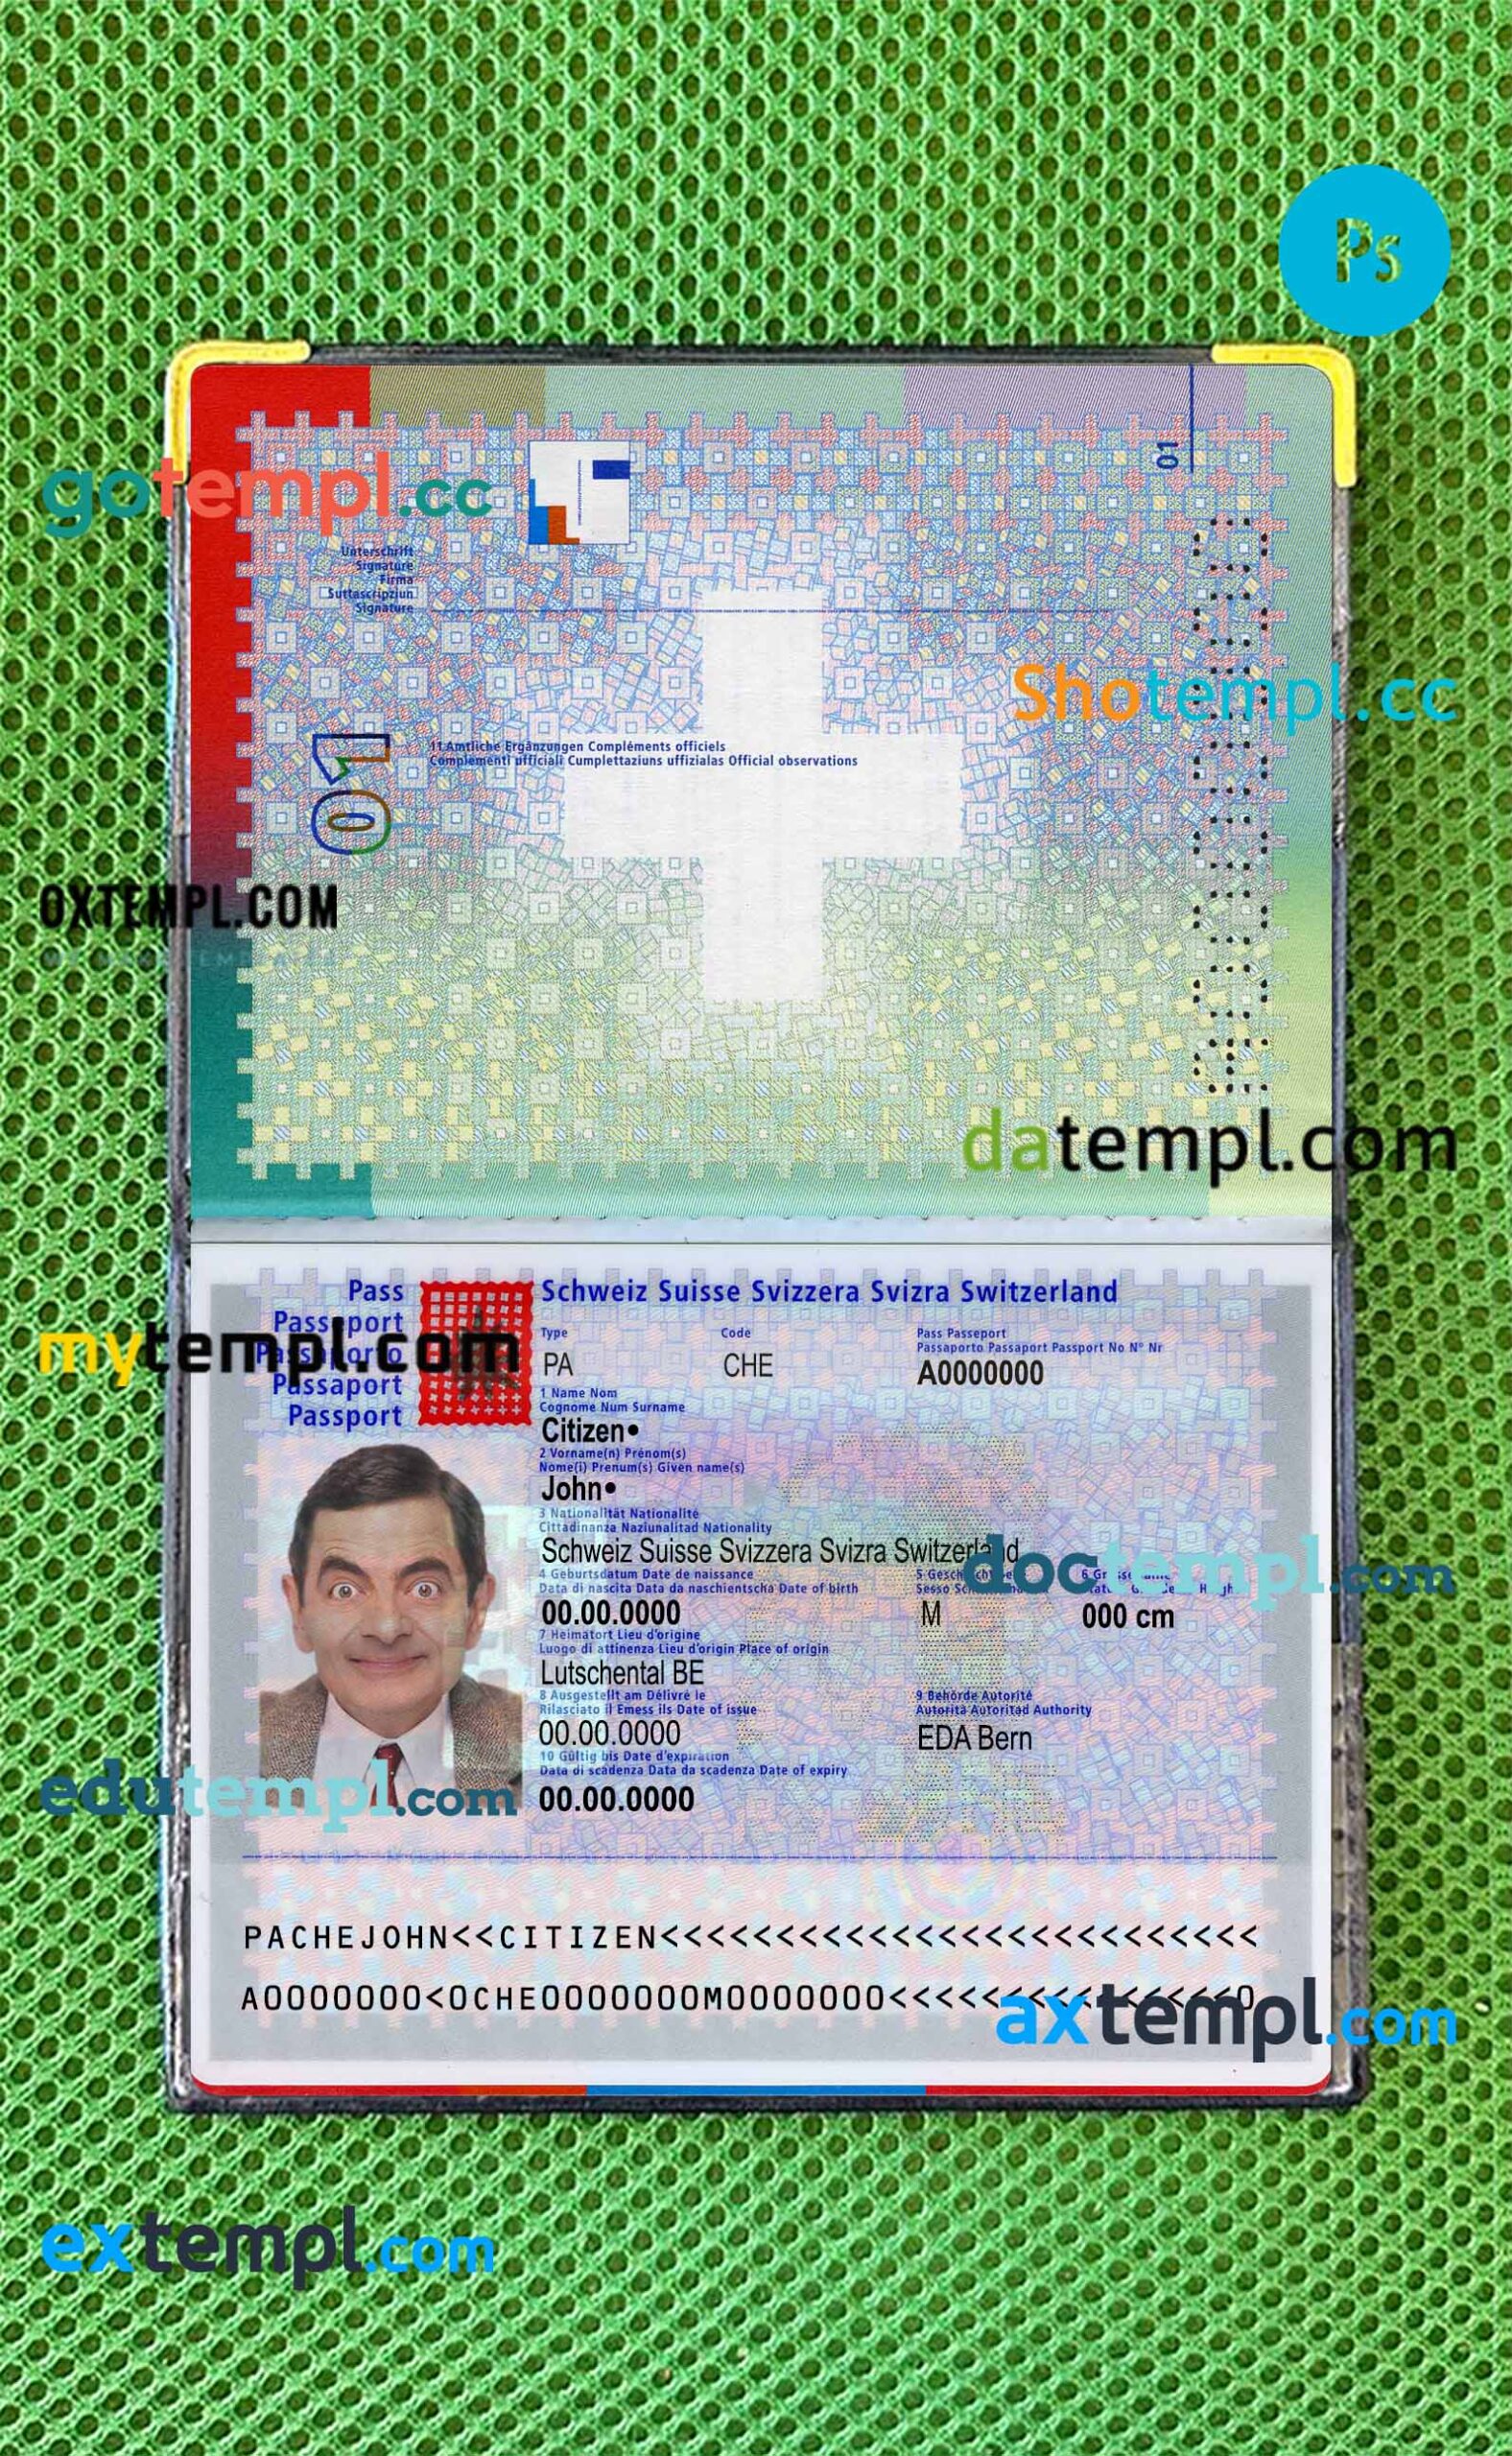 Church ID card PSD template, version 8